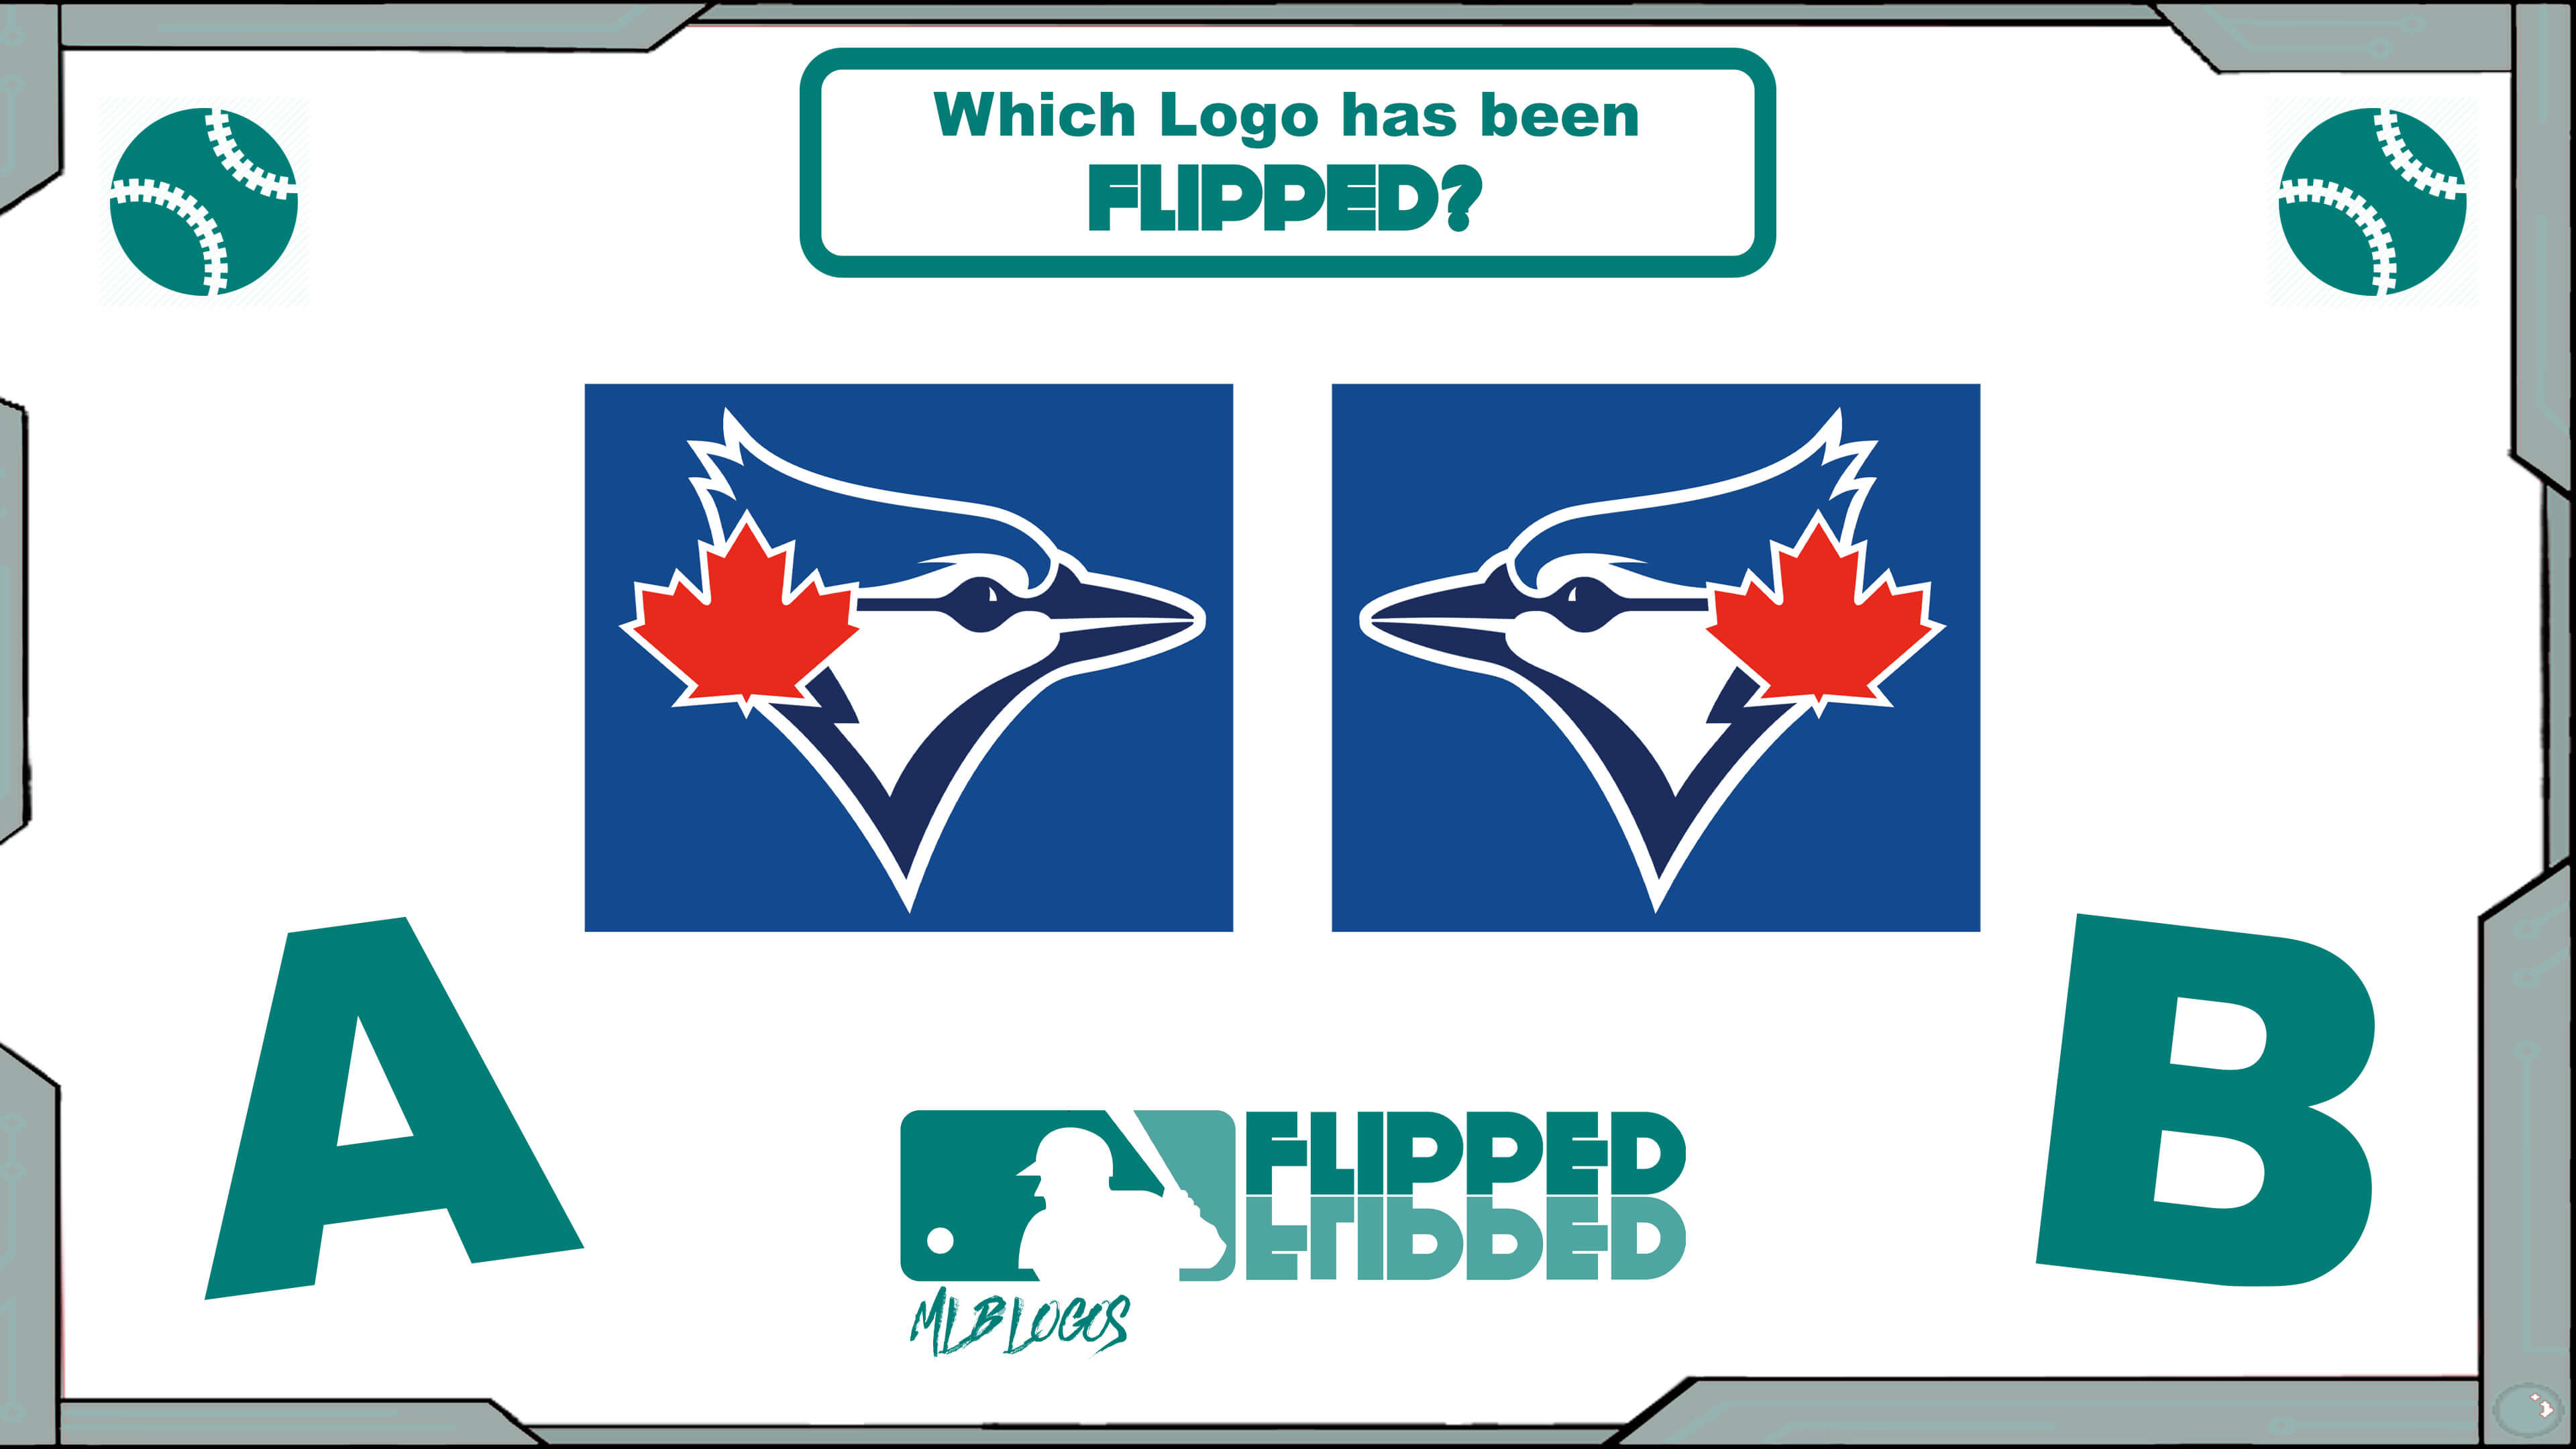 Flipped: MLB Logos